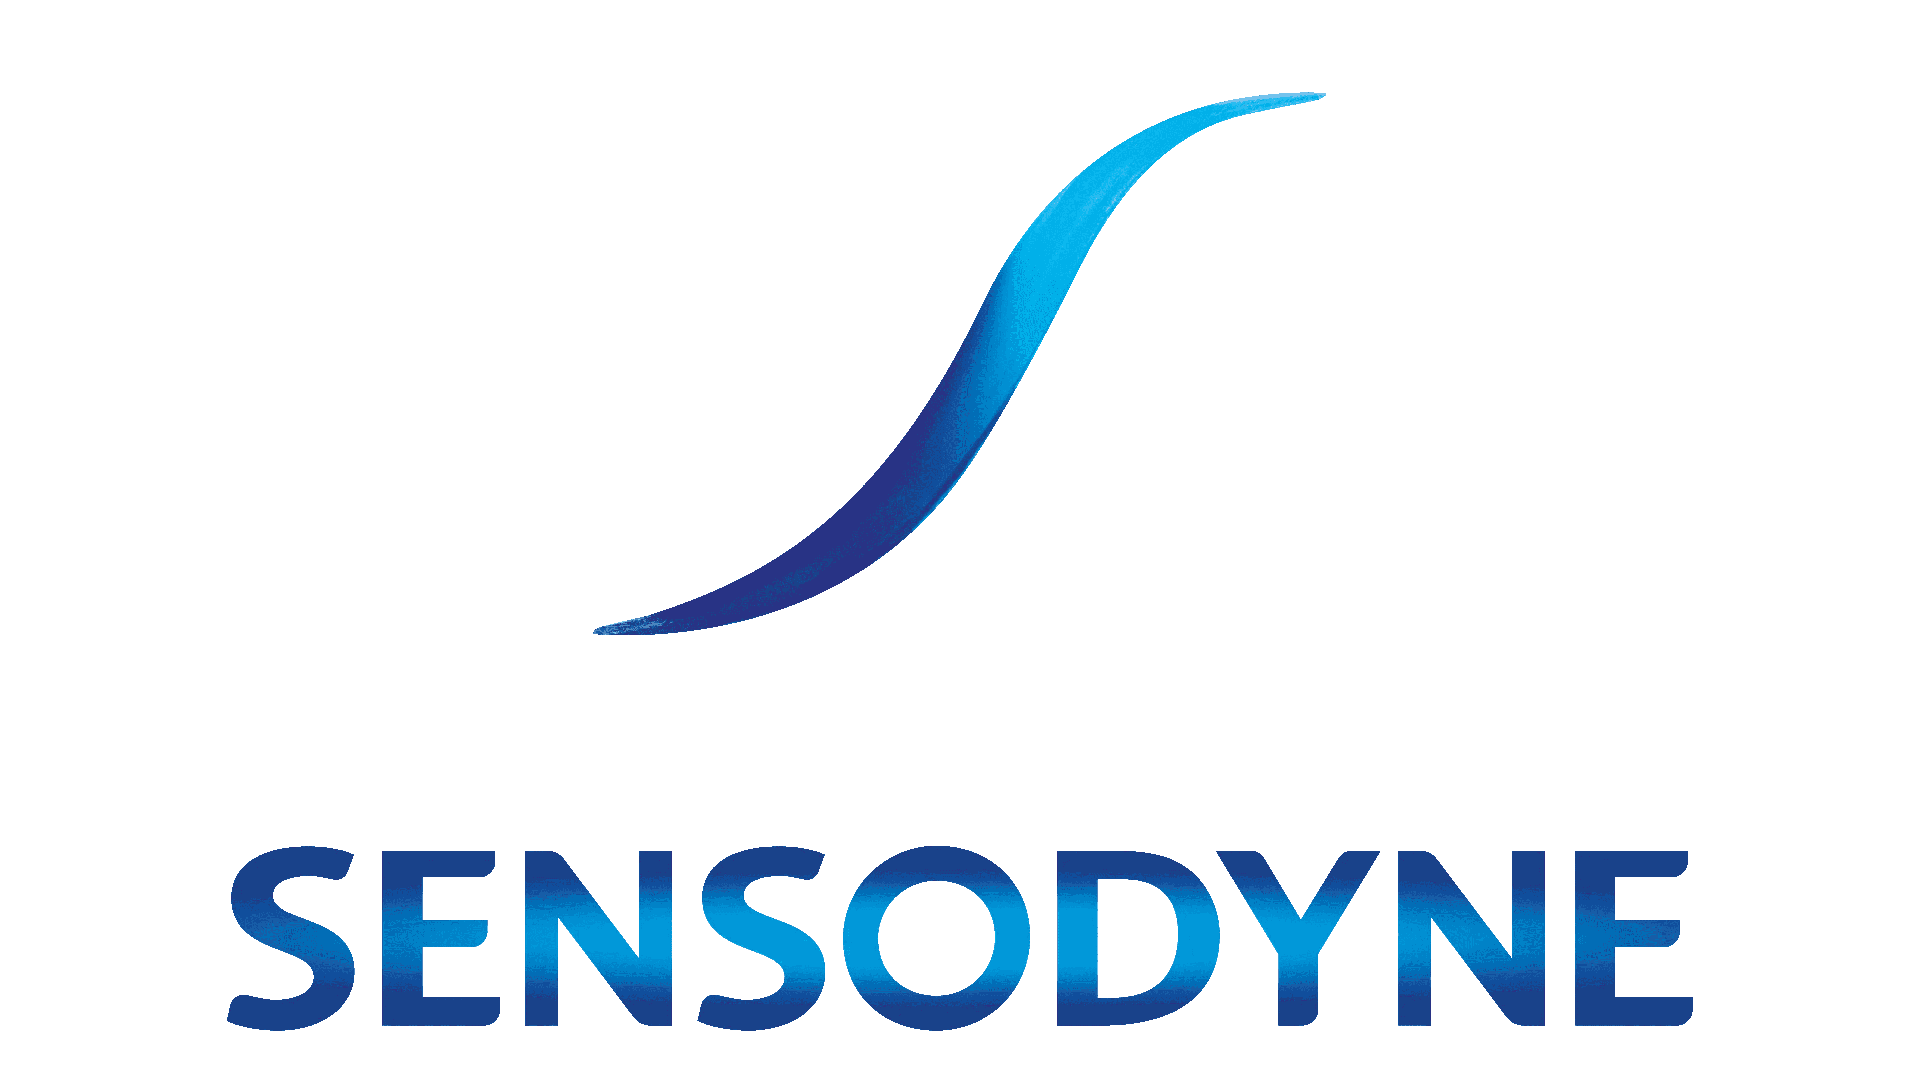 Brand: Sensodyne